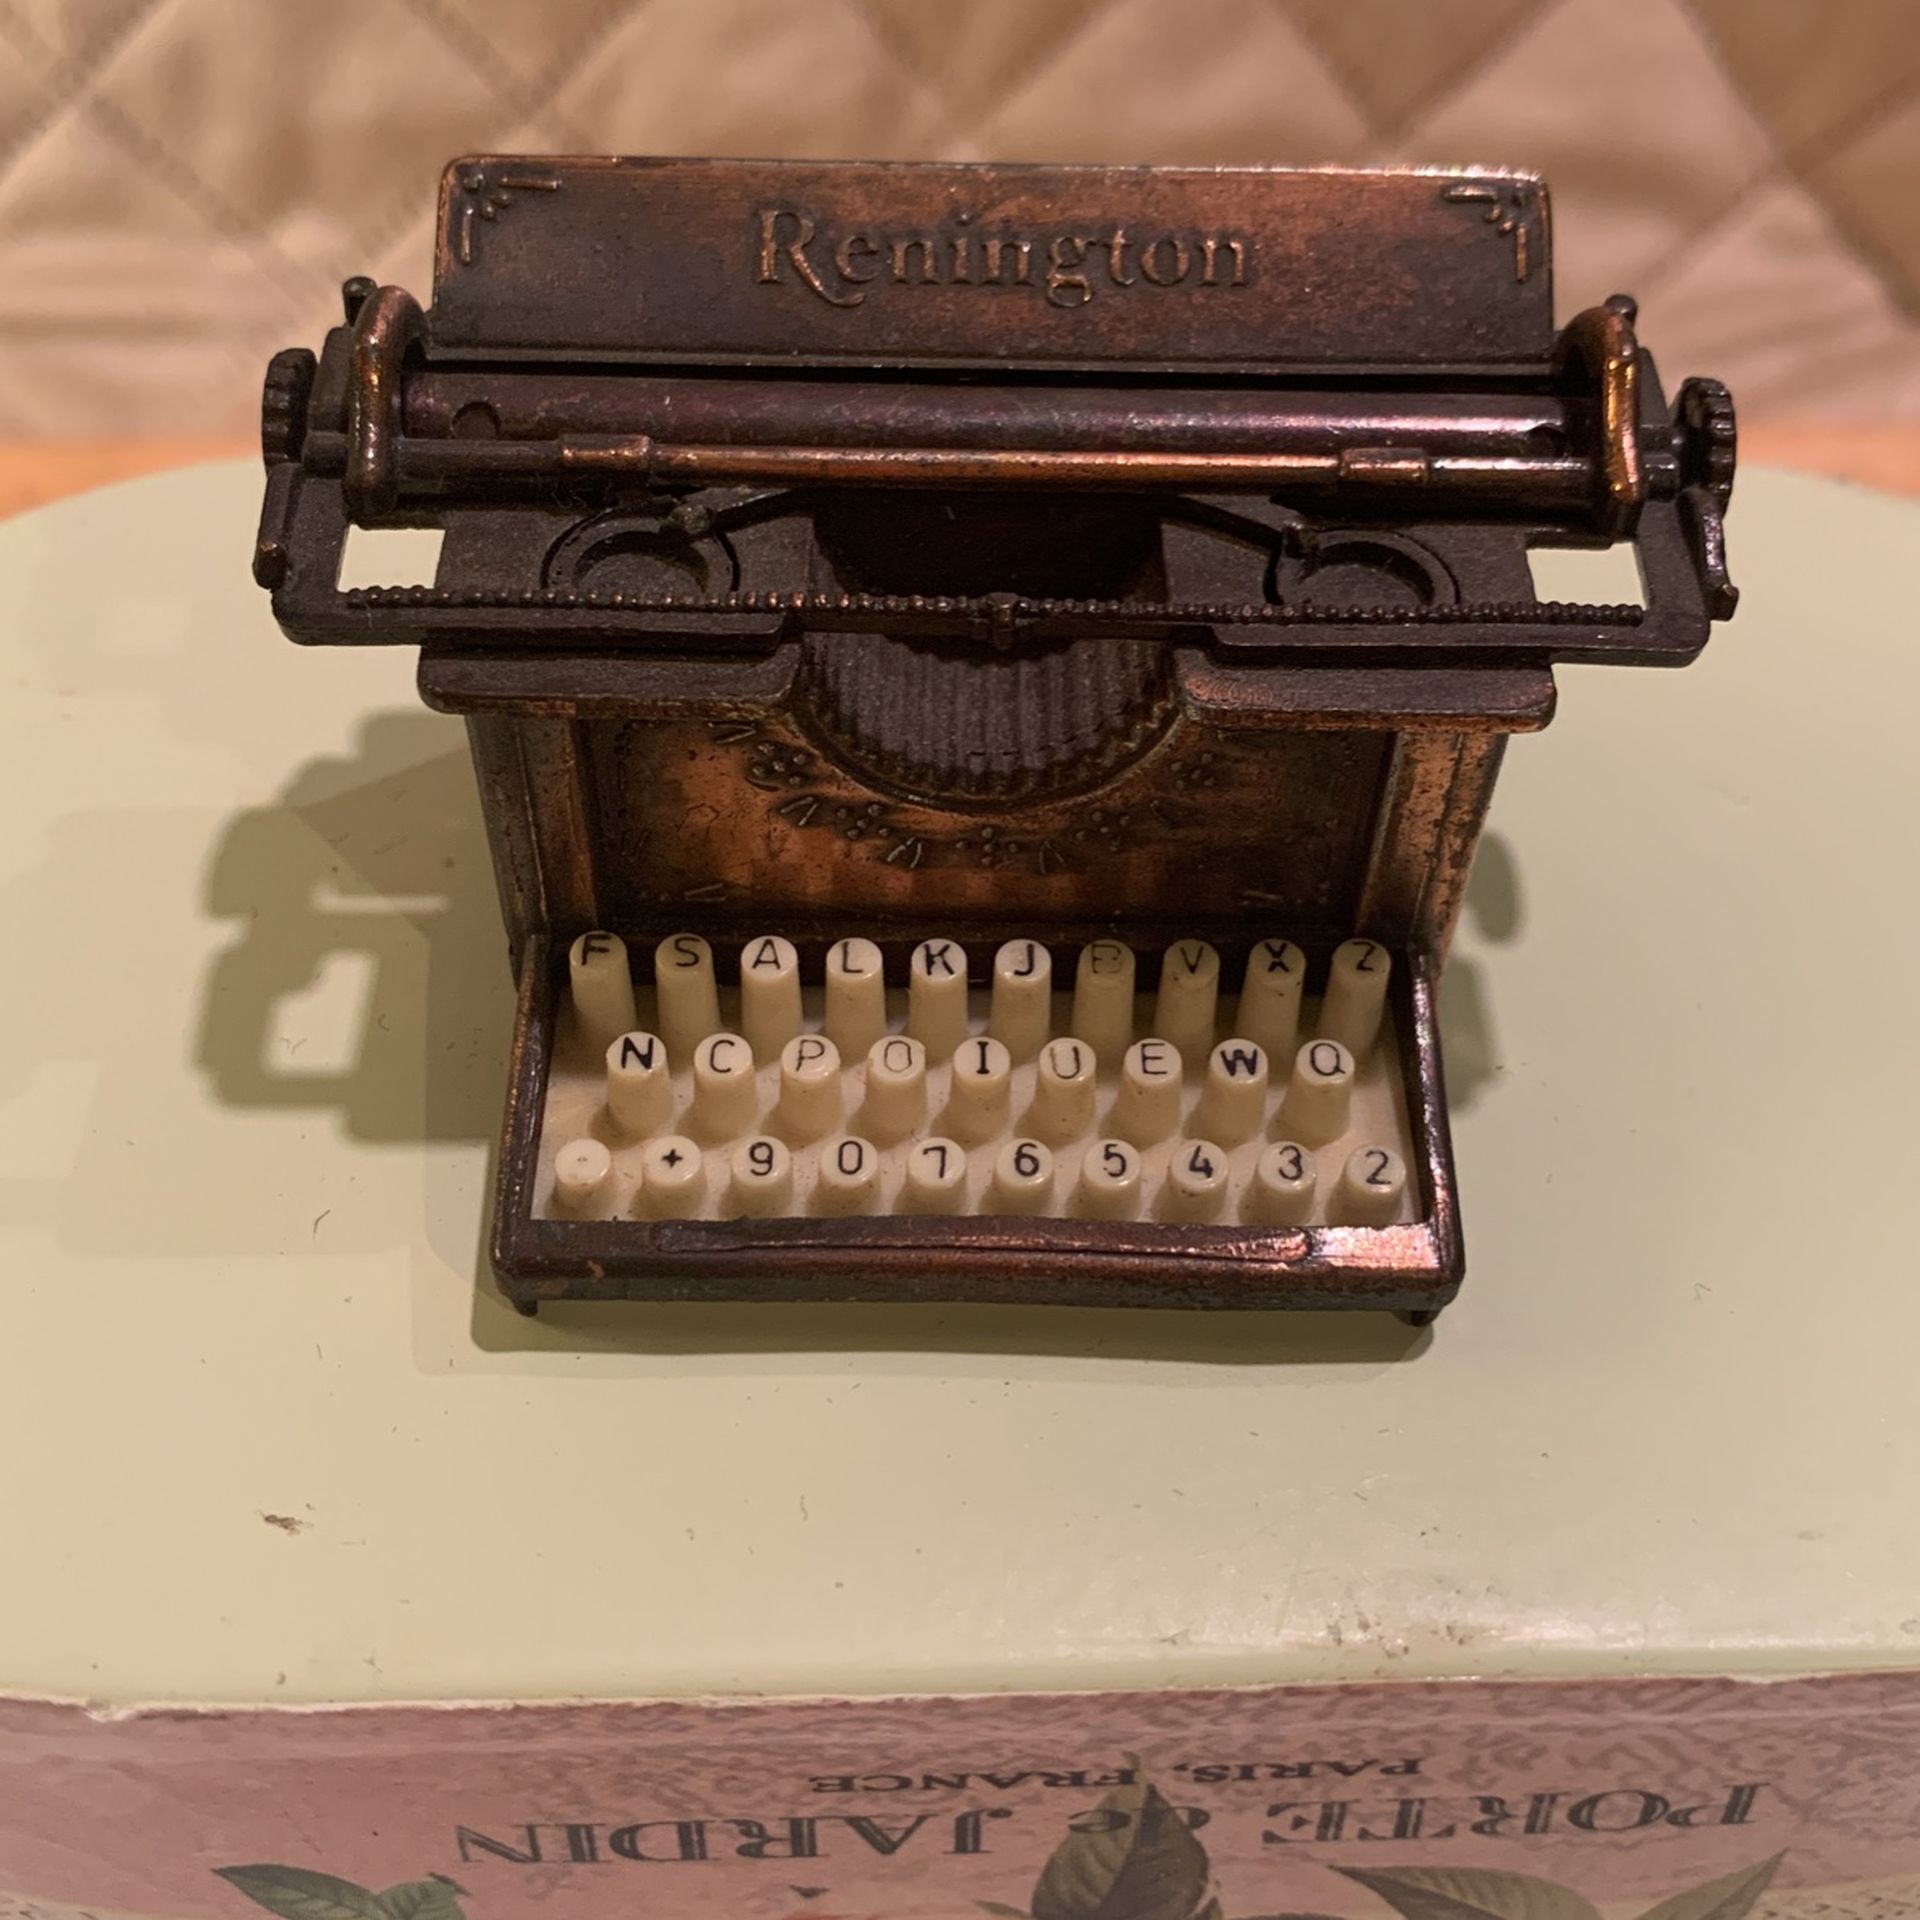 VTG Cast iron  Renington Typewriter Pencil Sharpener W/ Moving Platen, Ornate